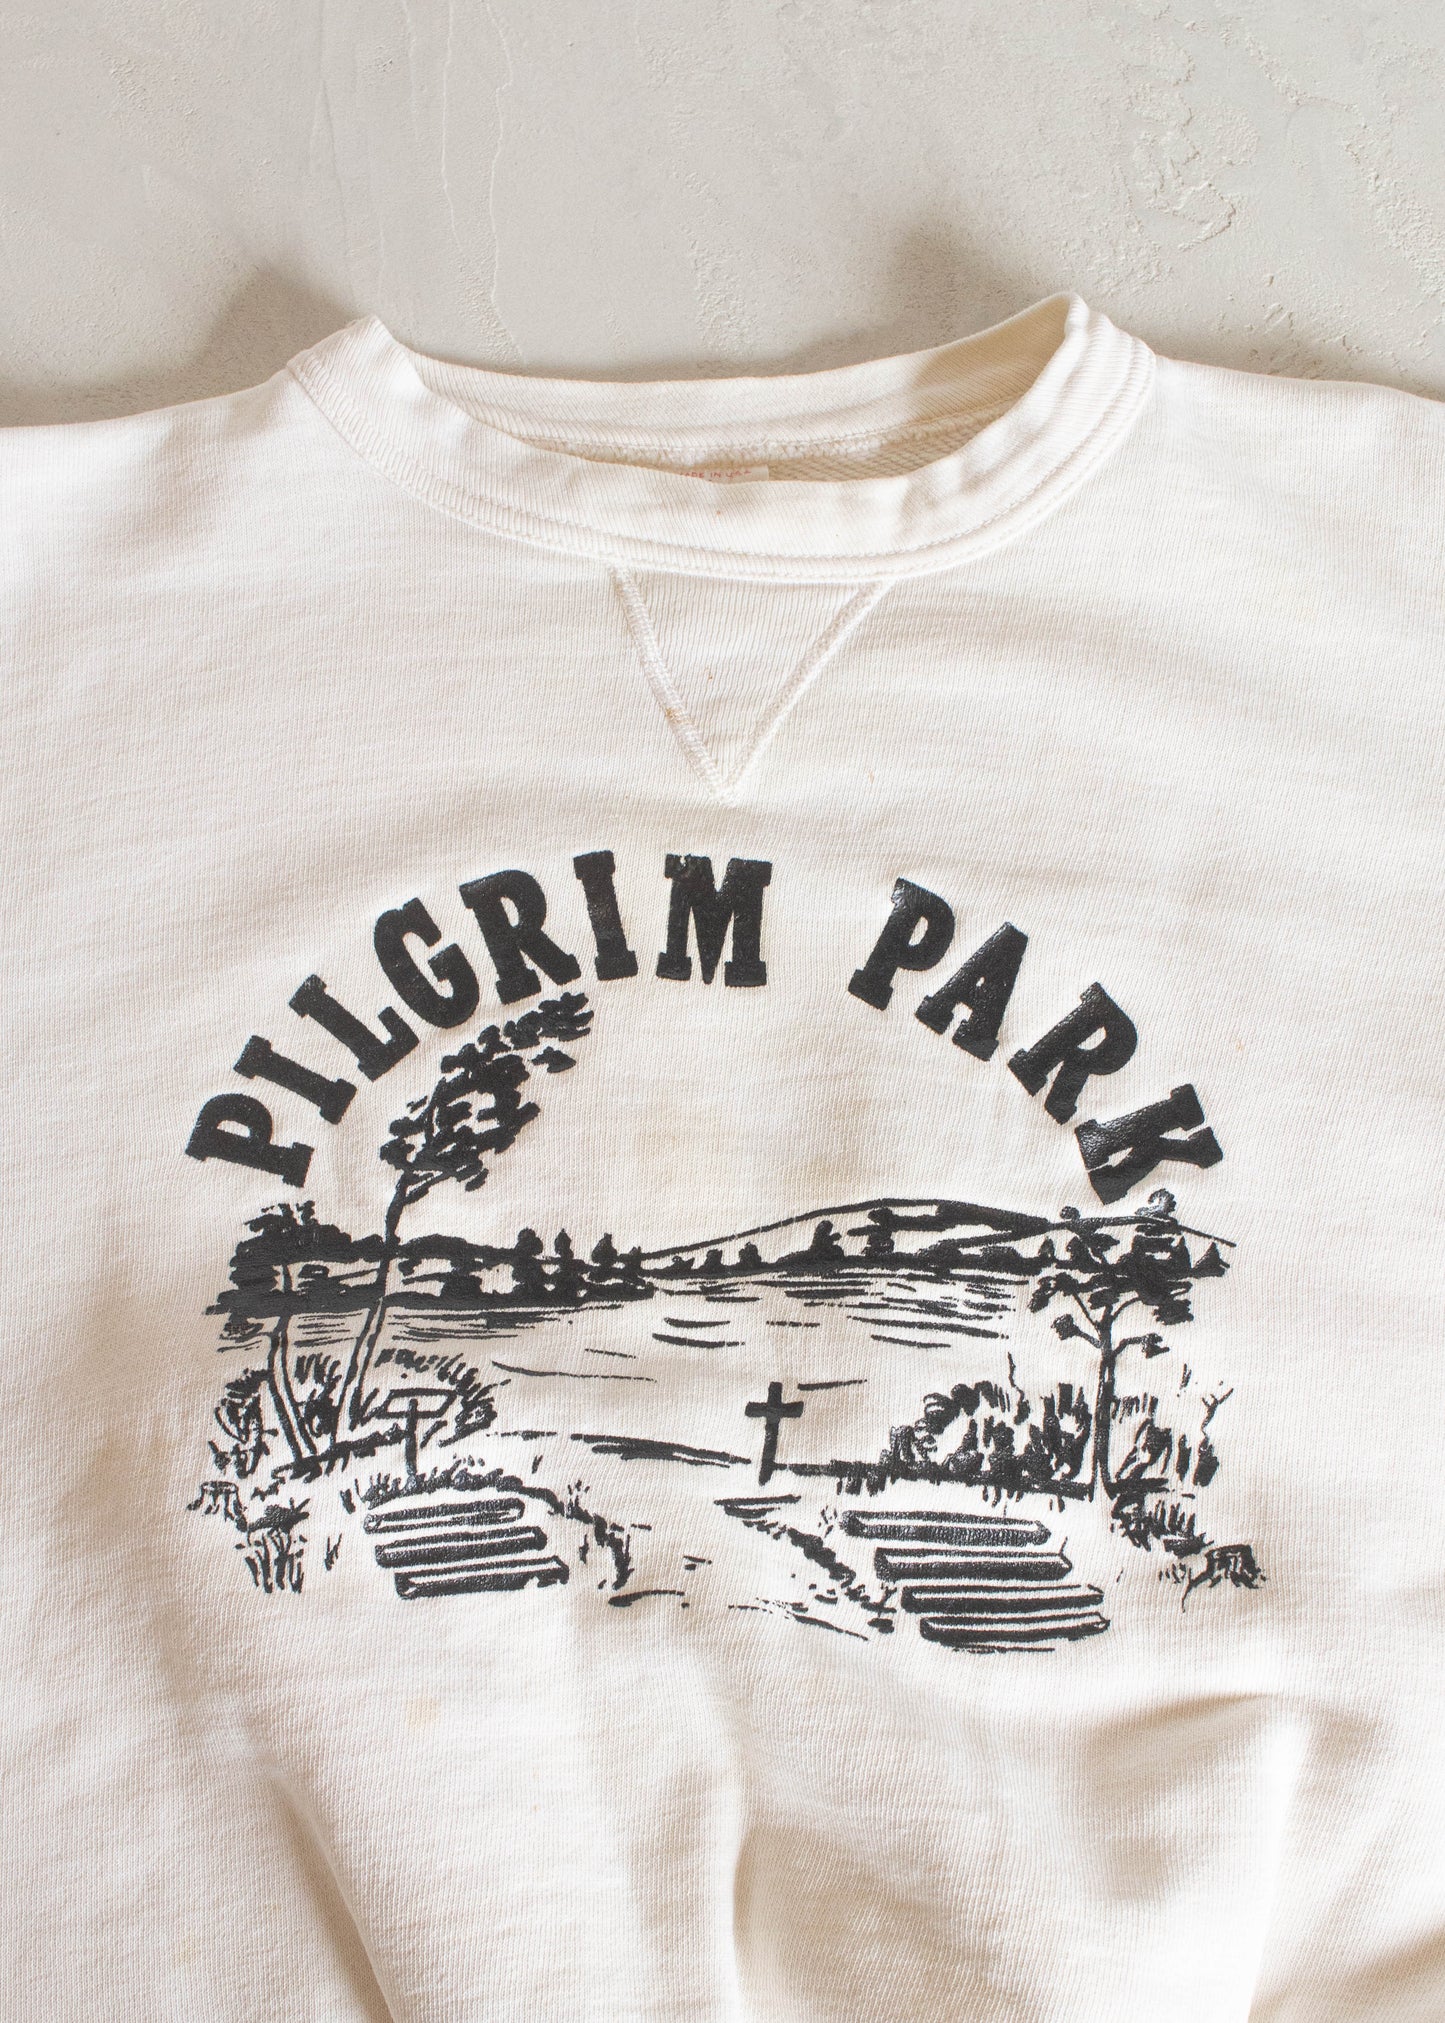 1950s Single V Pilgrim Park Sweatshirt Size M/L